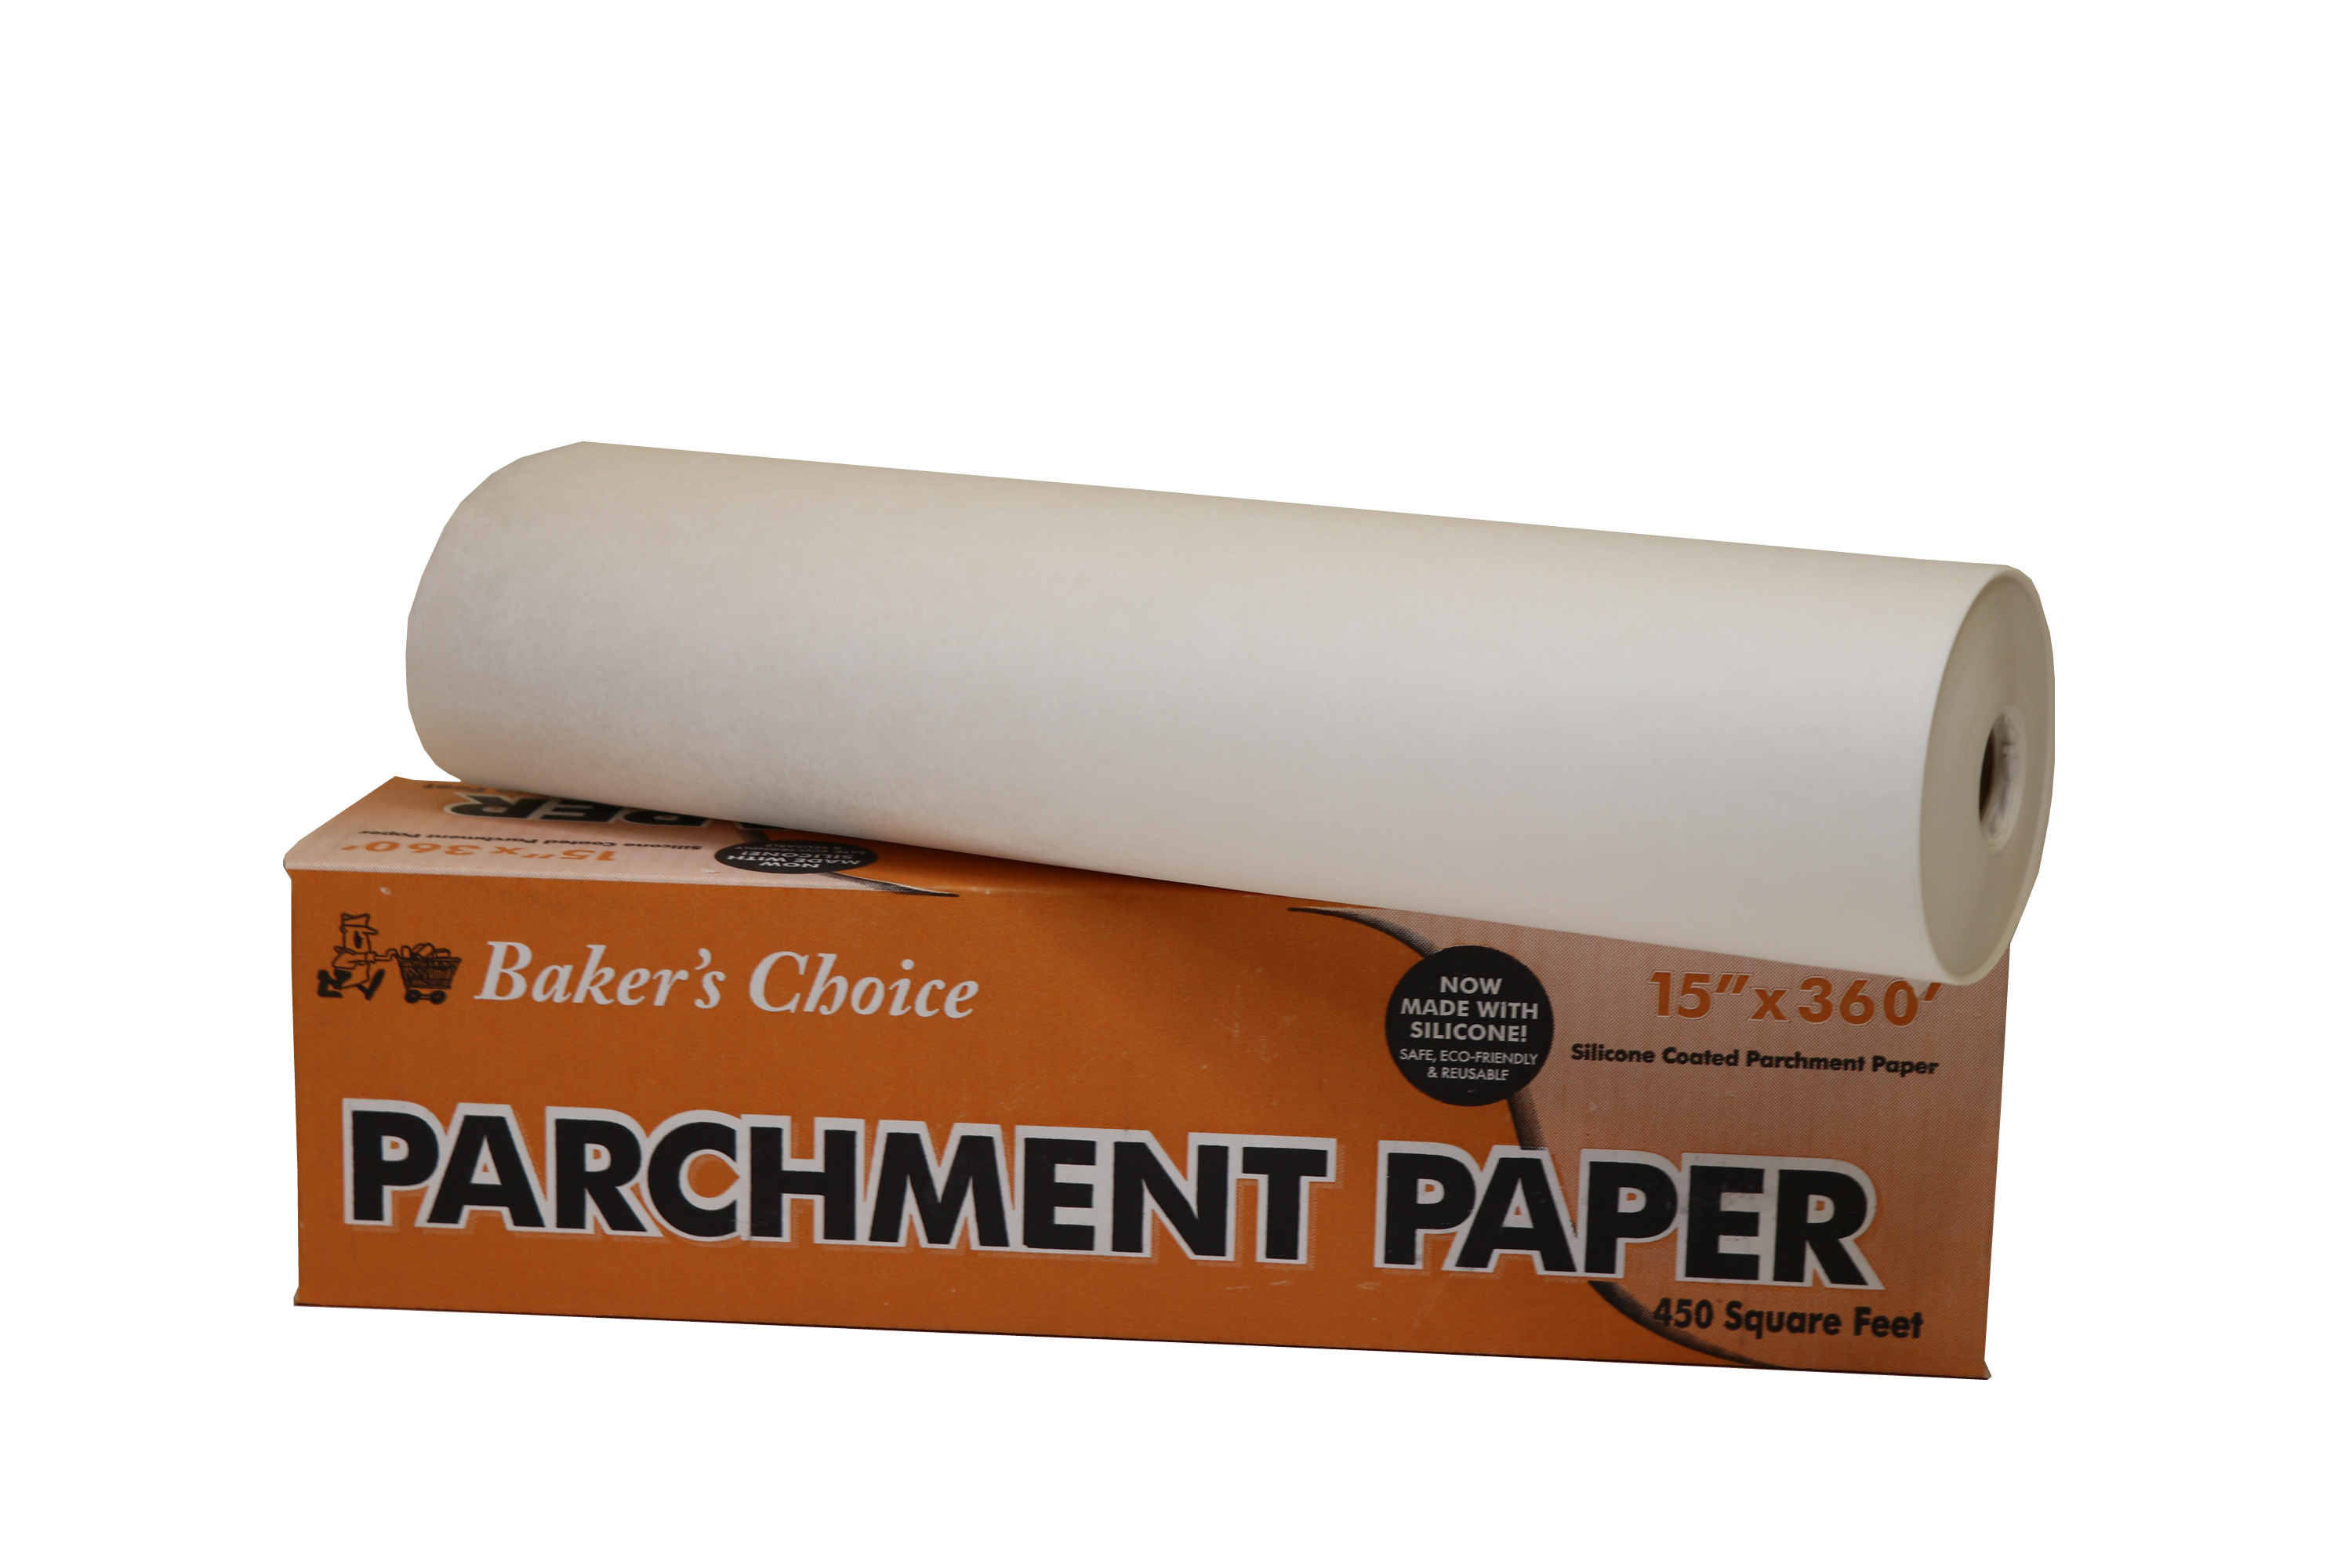 Baking Paper (Parchment Paper) Roll 20 mtr